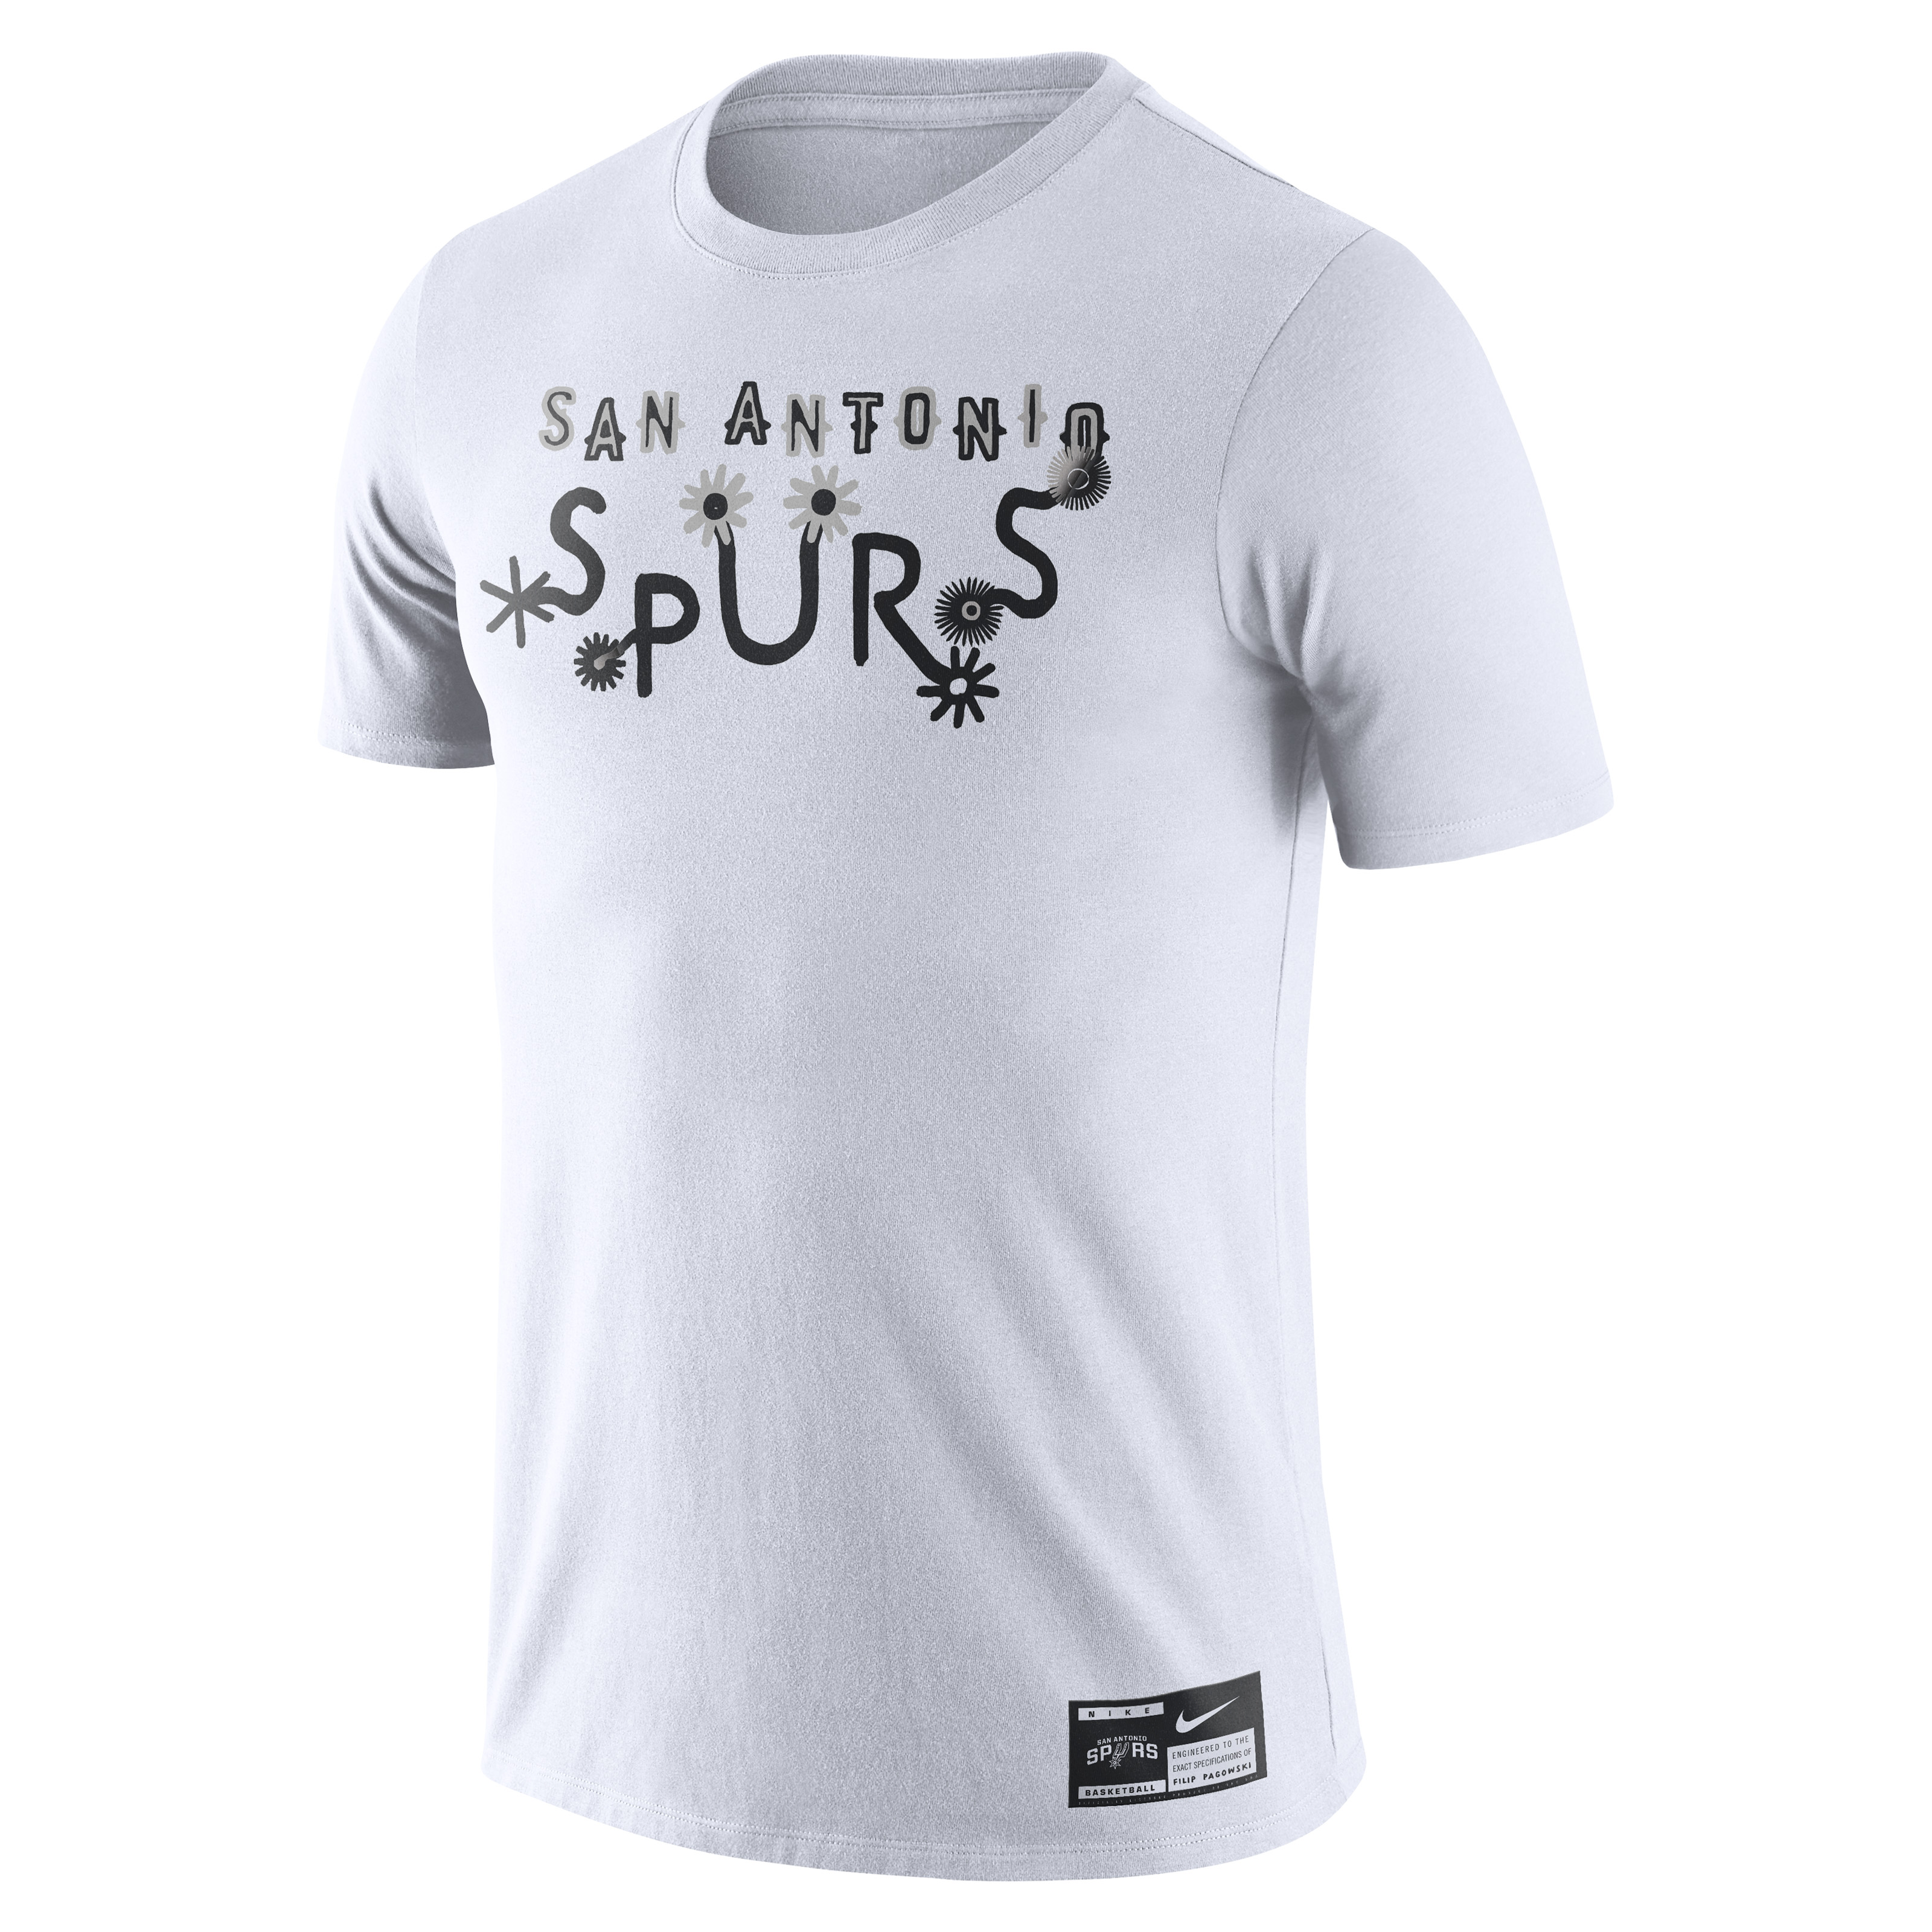 Filip Pagowski Nike T shirt &#x27;San Antonio Spurs&#x27;